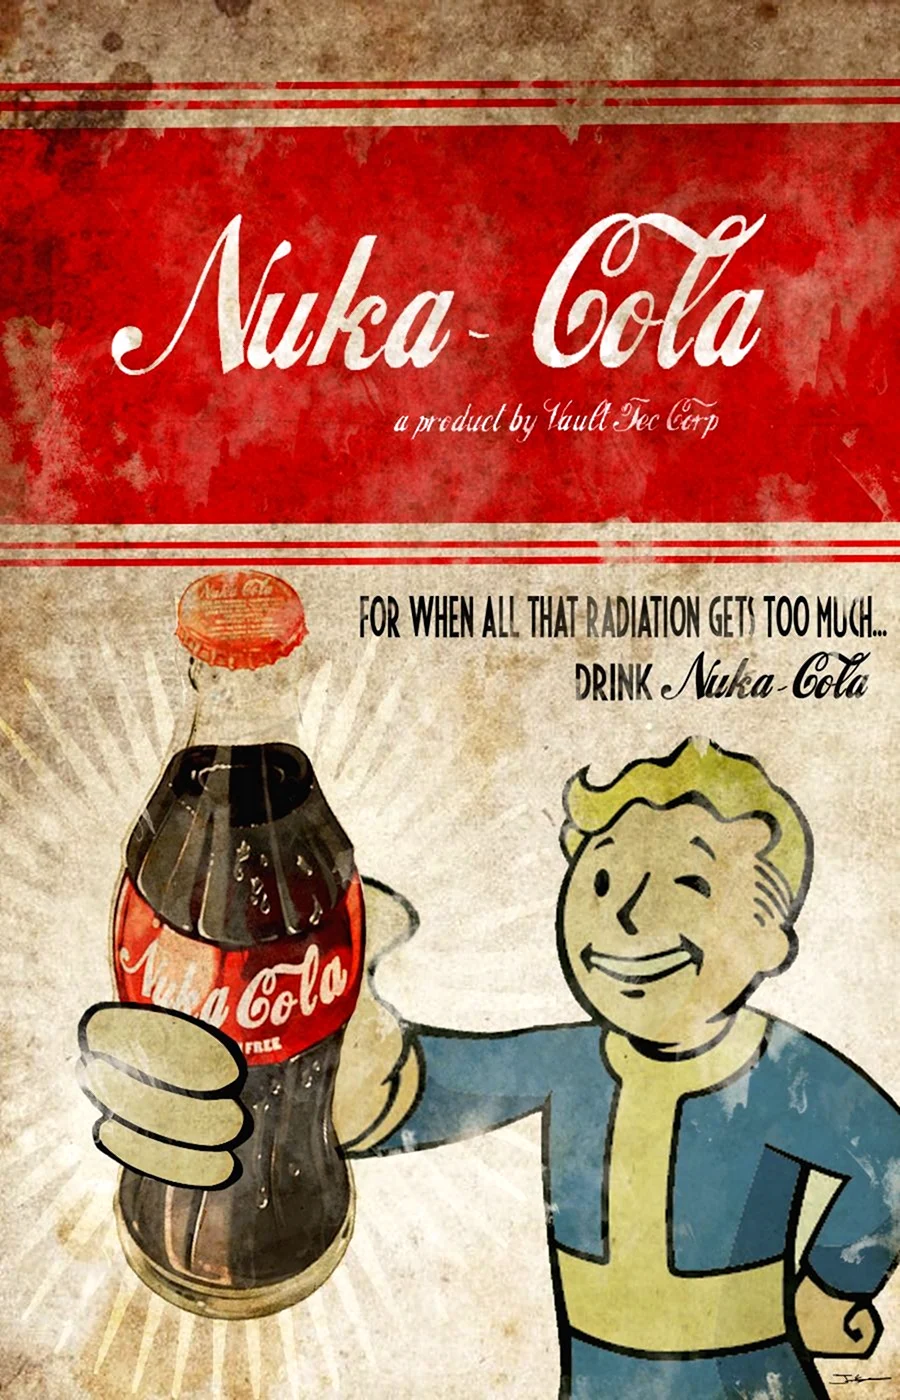 Fallout 3 постеры ядер кола